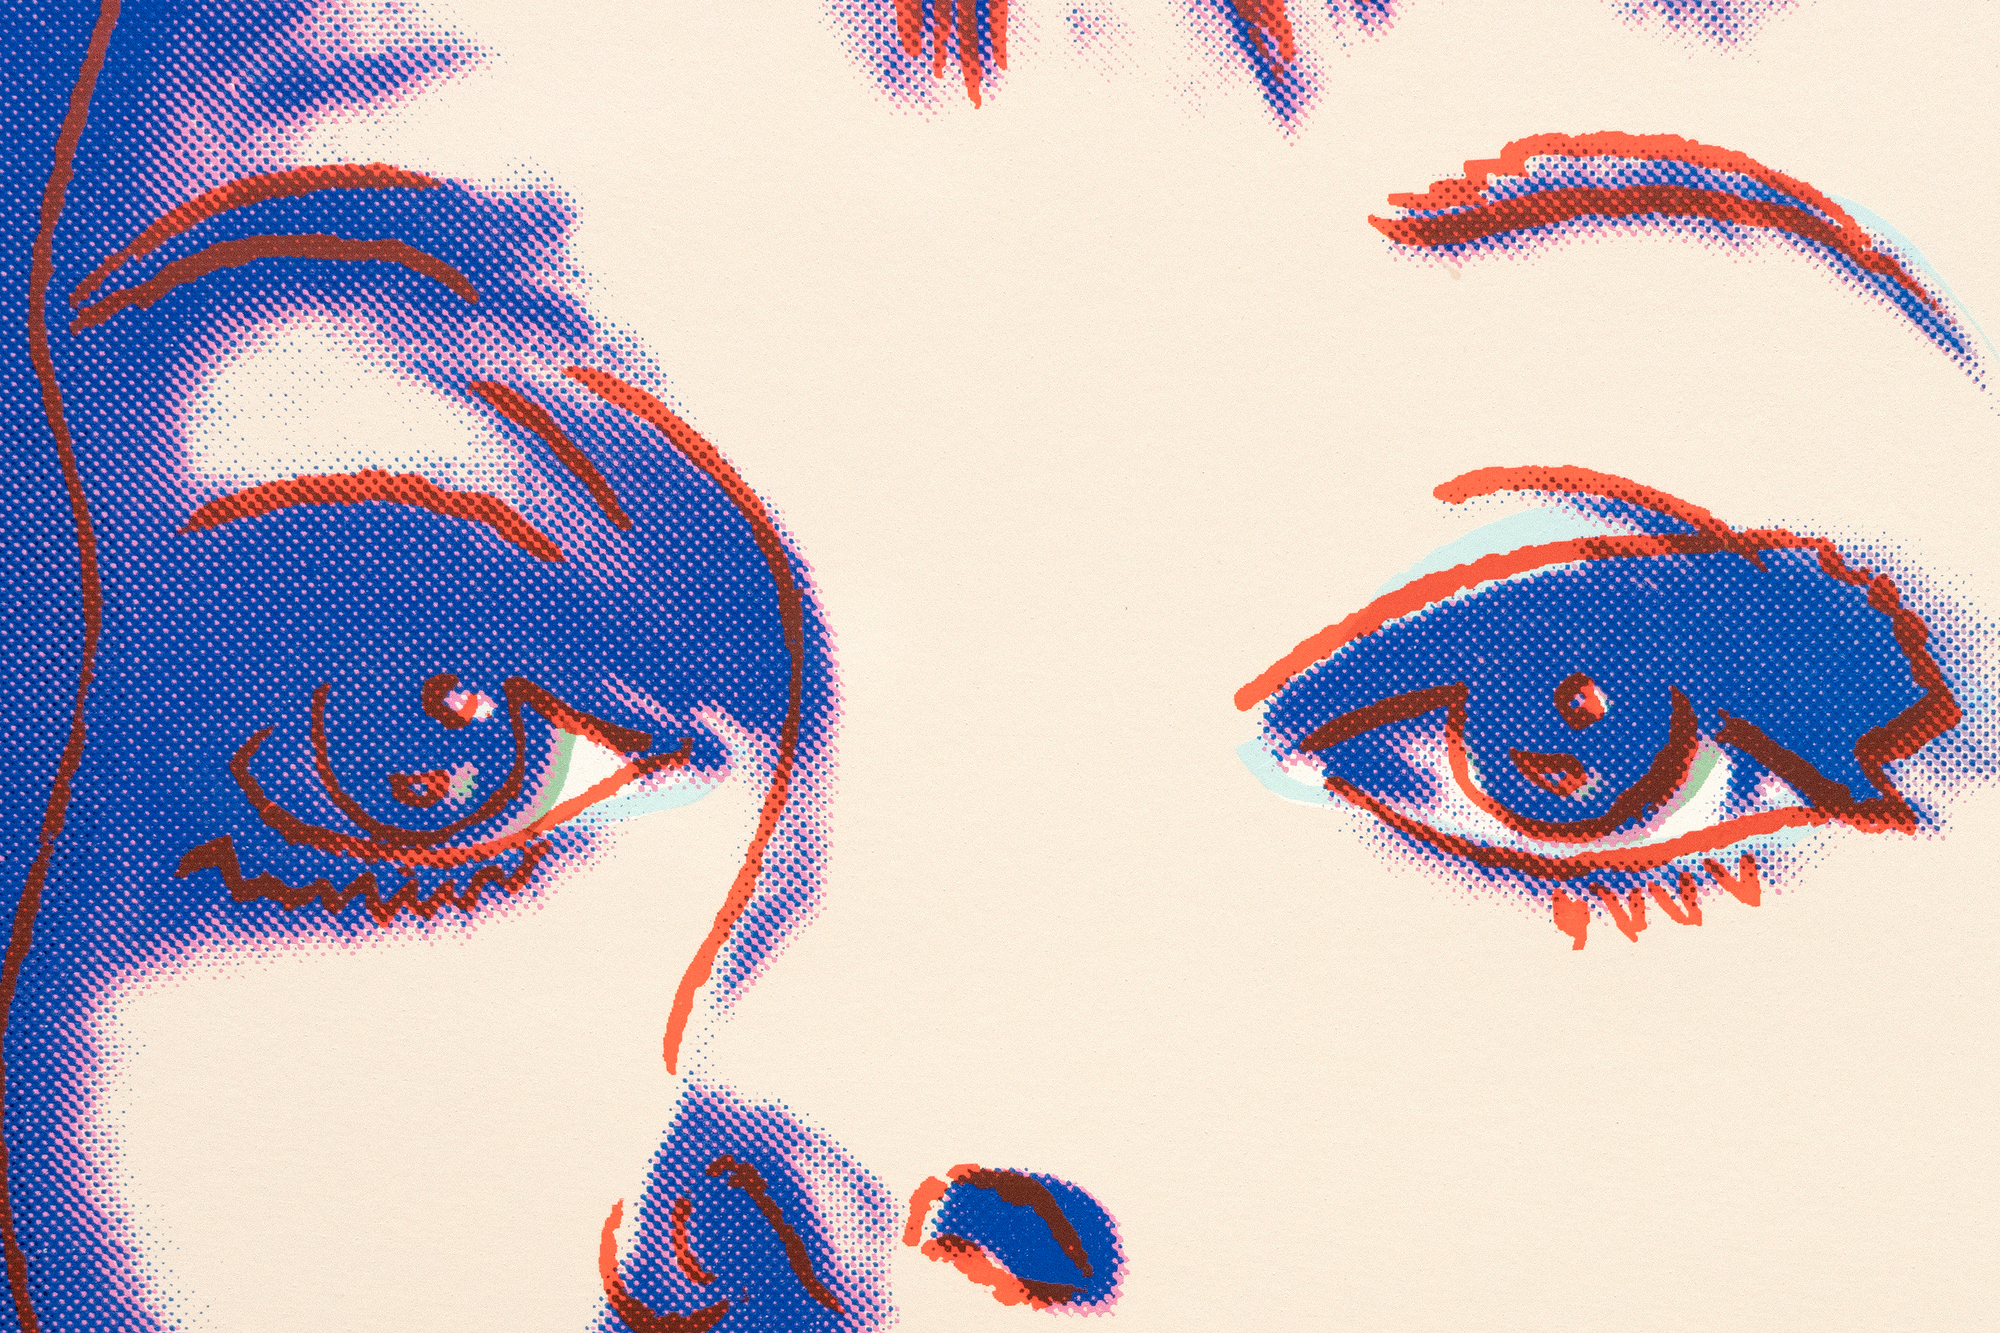 ANDY WARHOL - Blackglama (Judy Garland) - screenprint - 38 x 38 in.